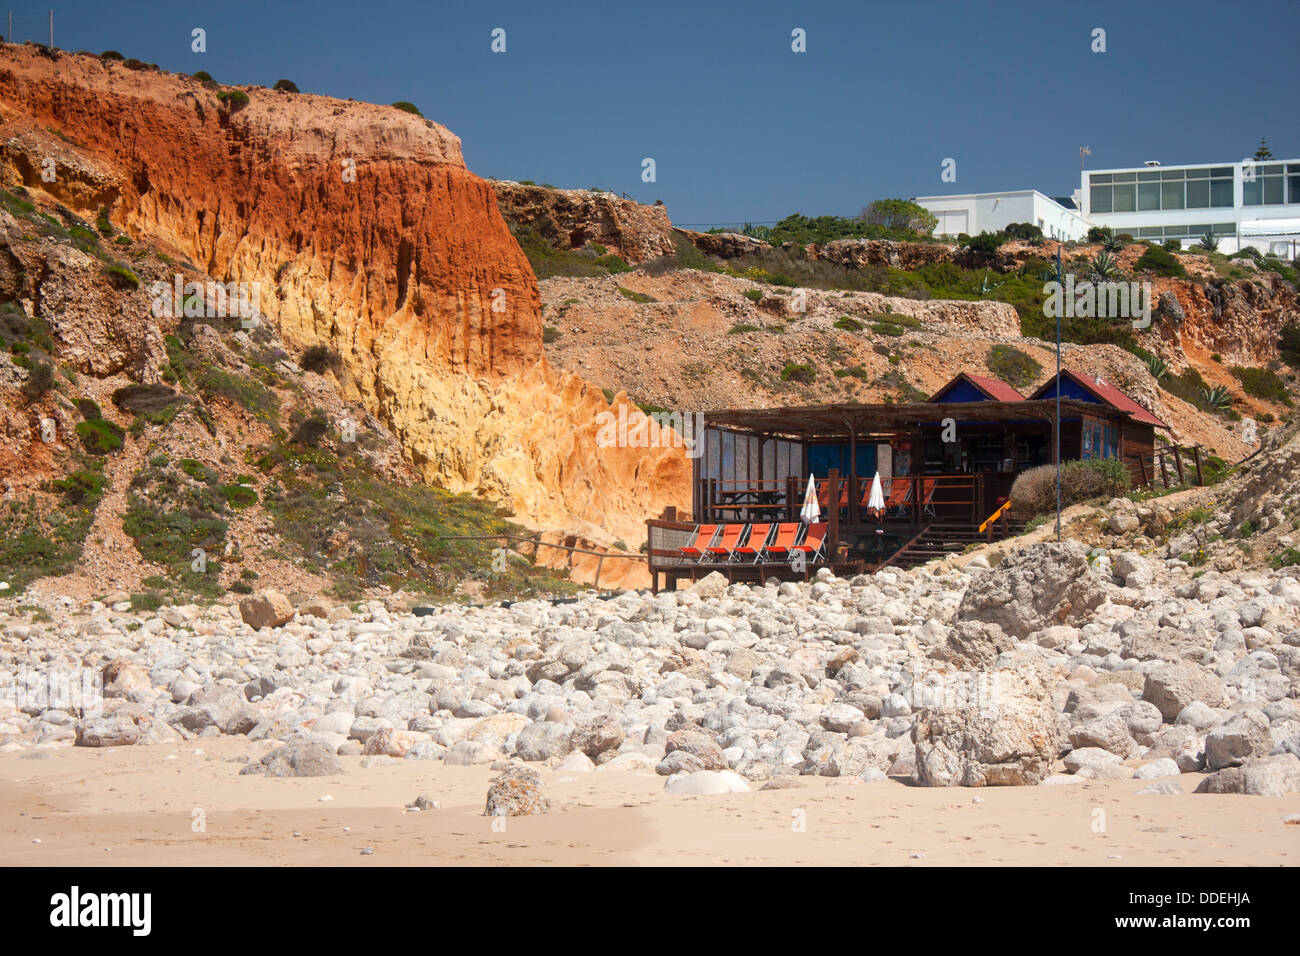 Praia Tonel Strand Shack Cafe Bar in der Ecke der Strand am Fuße des ockerfarbenen Klippen Sagres Algarve Portugal Stockfoto